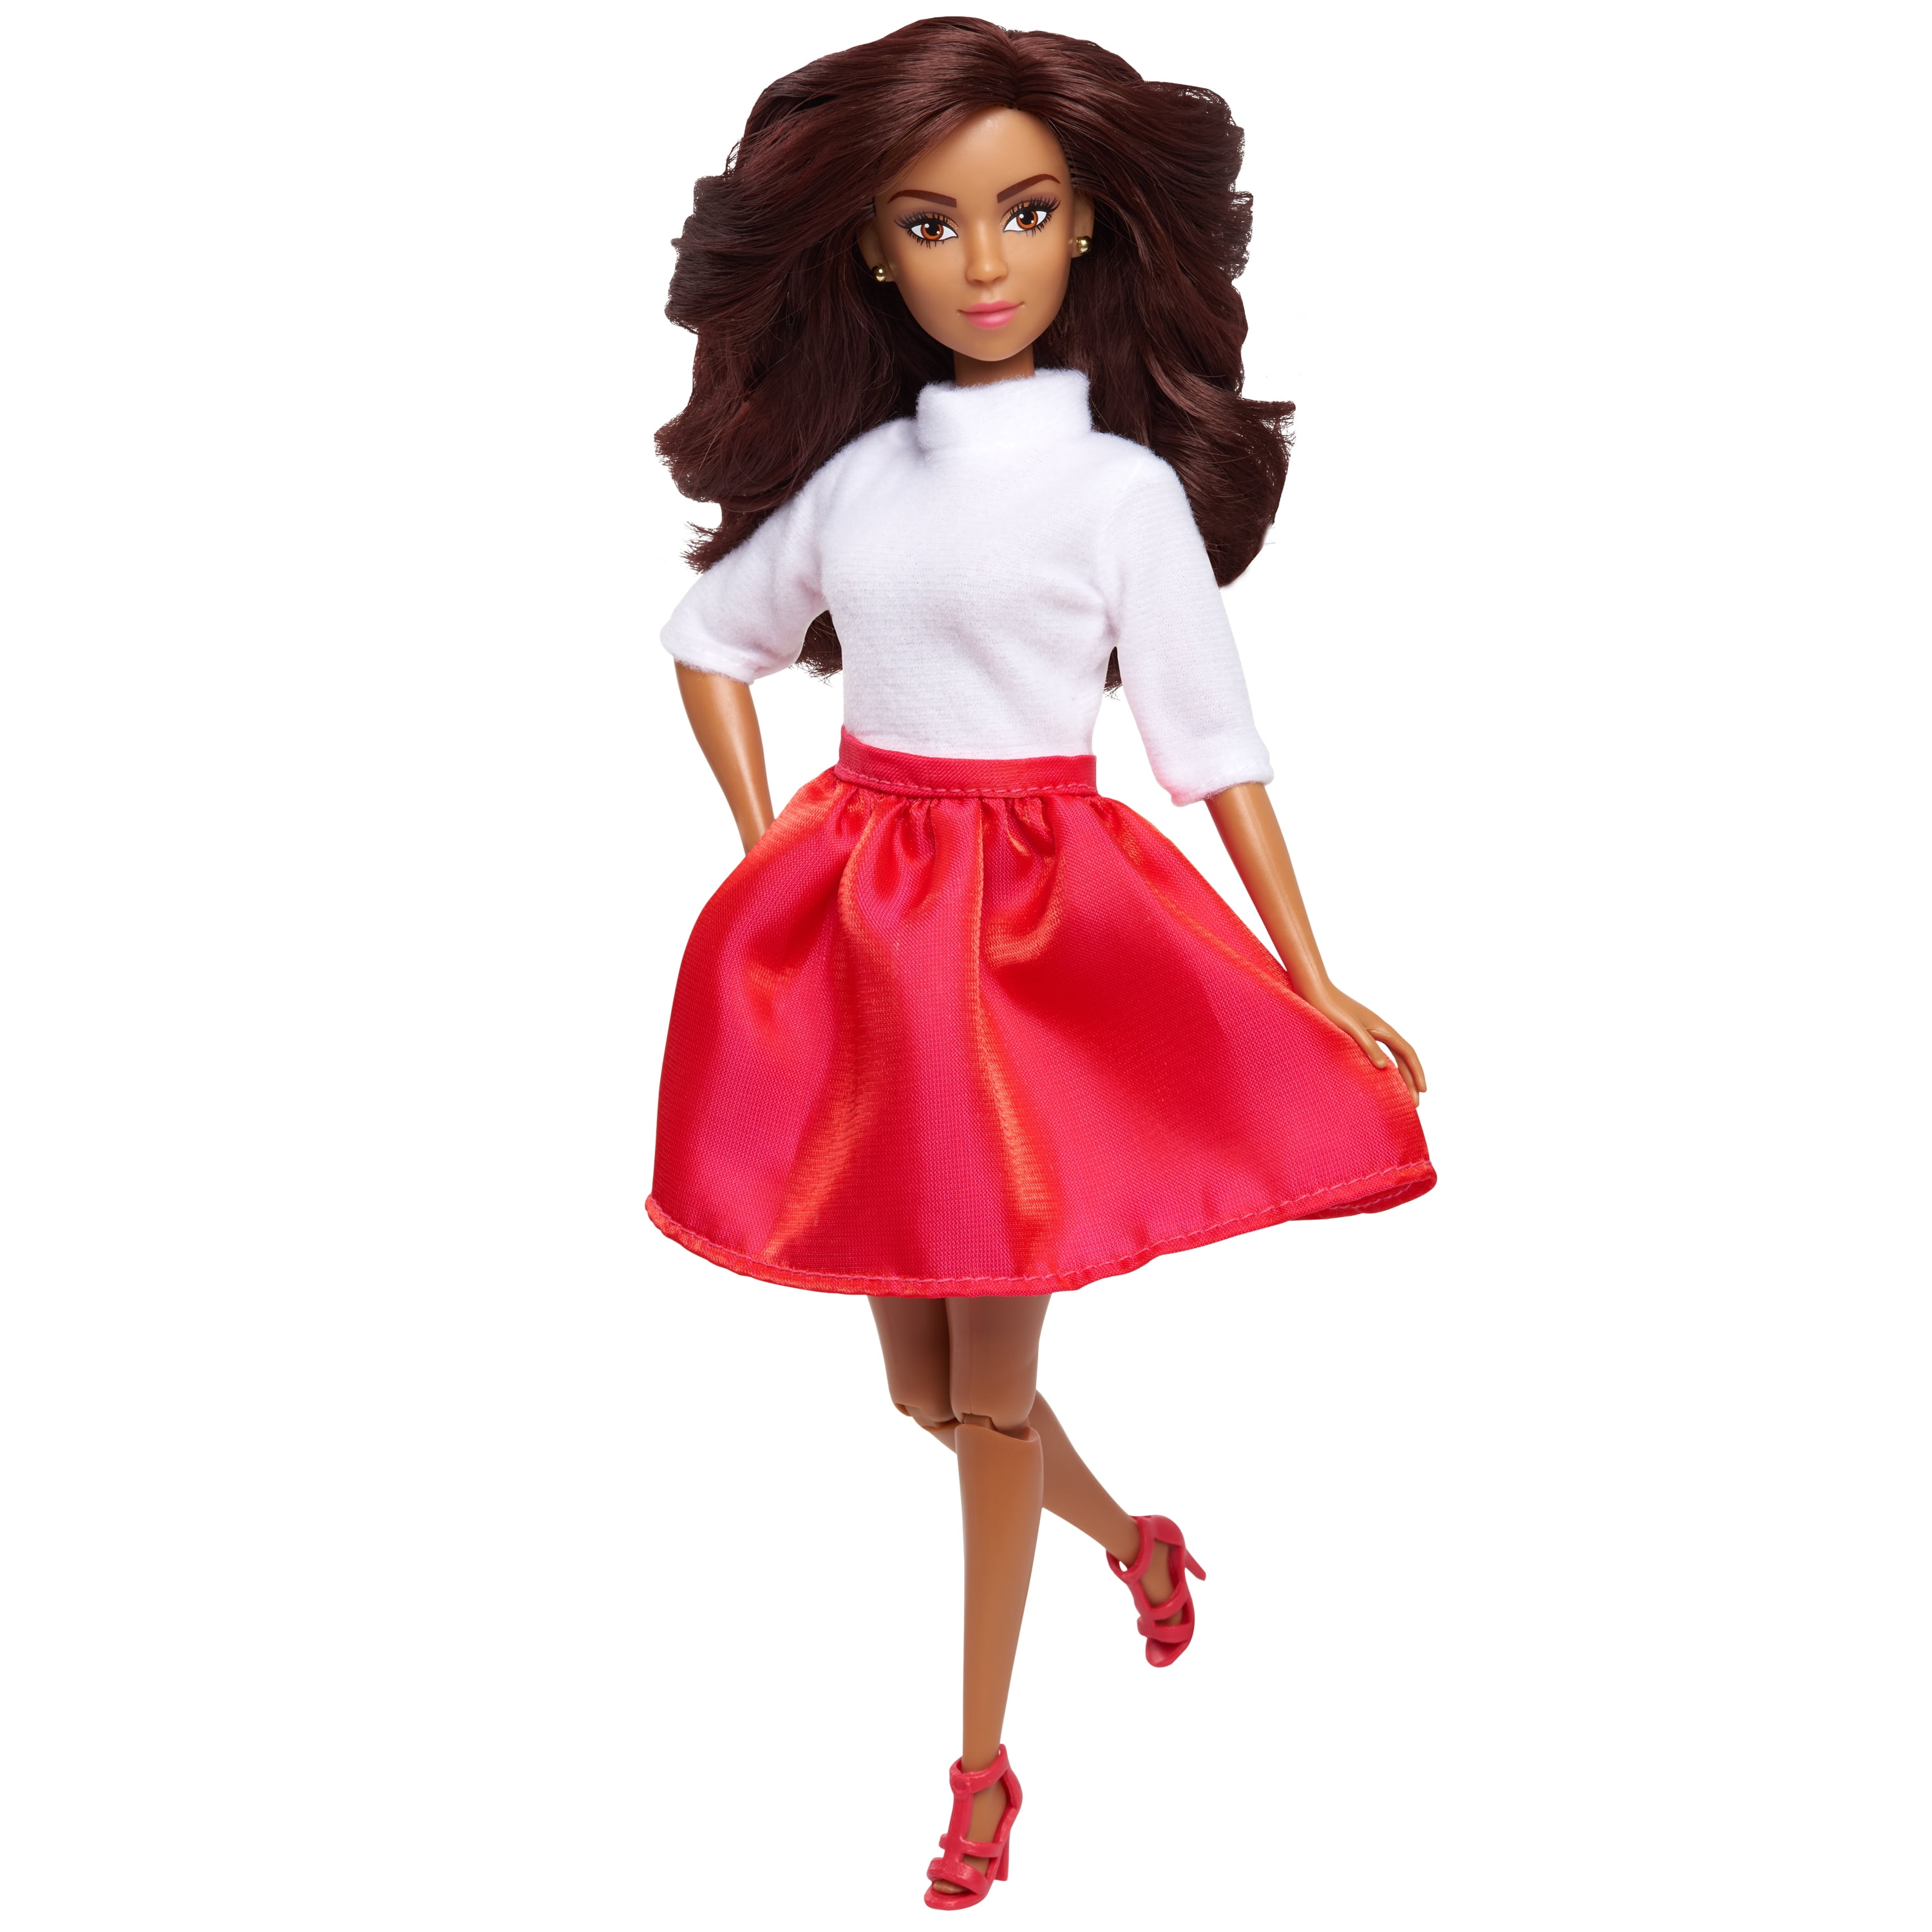 Barbie Inspiring Women Maya Angelou Doll Wearing Dress, with Doll 